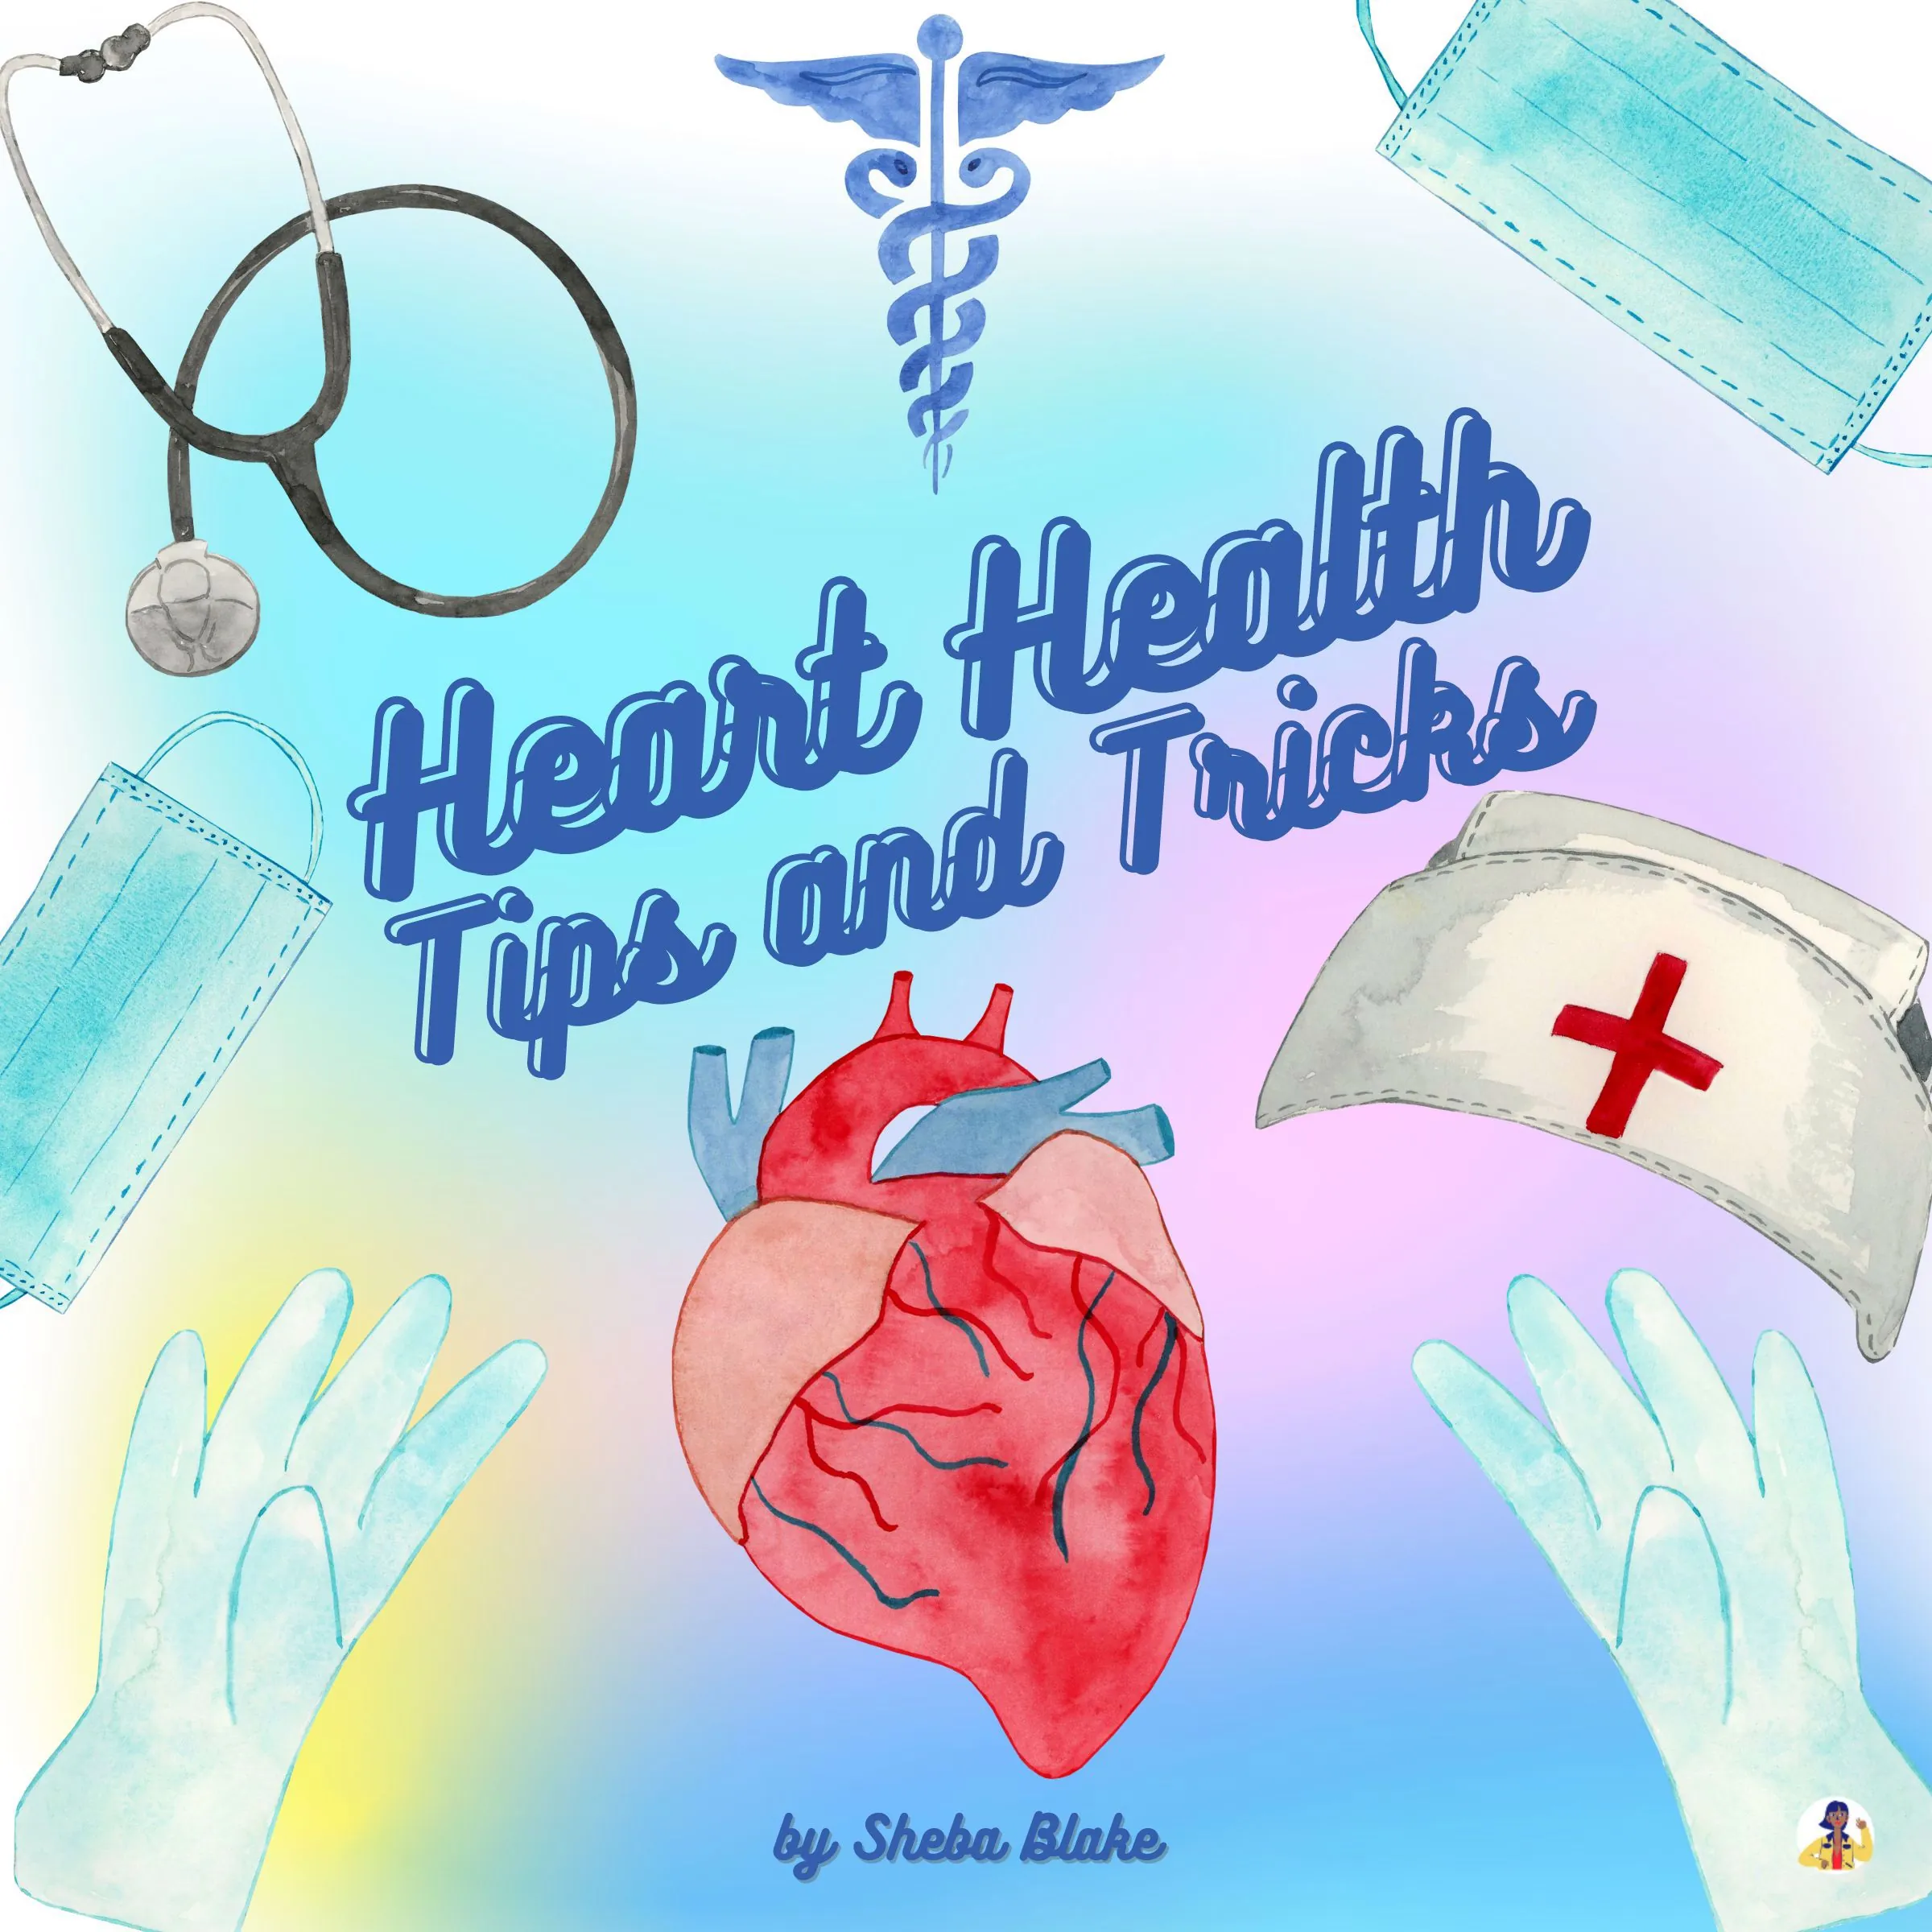 Heart Health: Tips and Tricks Audiobook by Sheba Blake